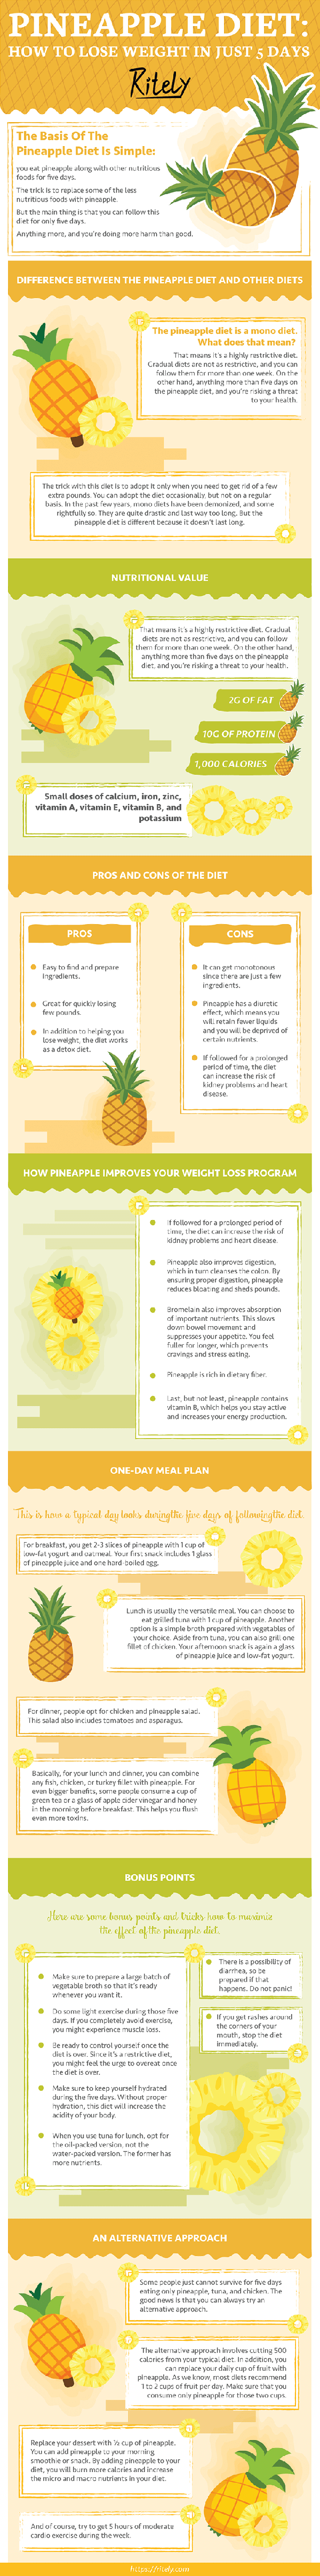 pineapple-diet-ritely-infographic